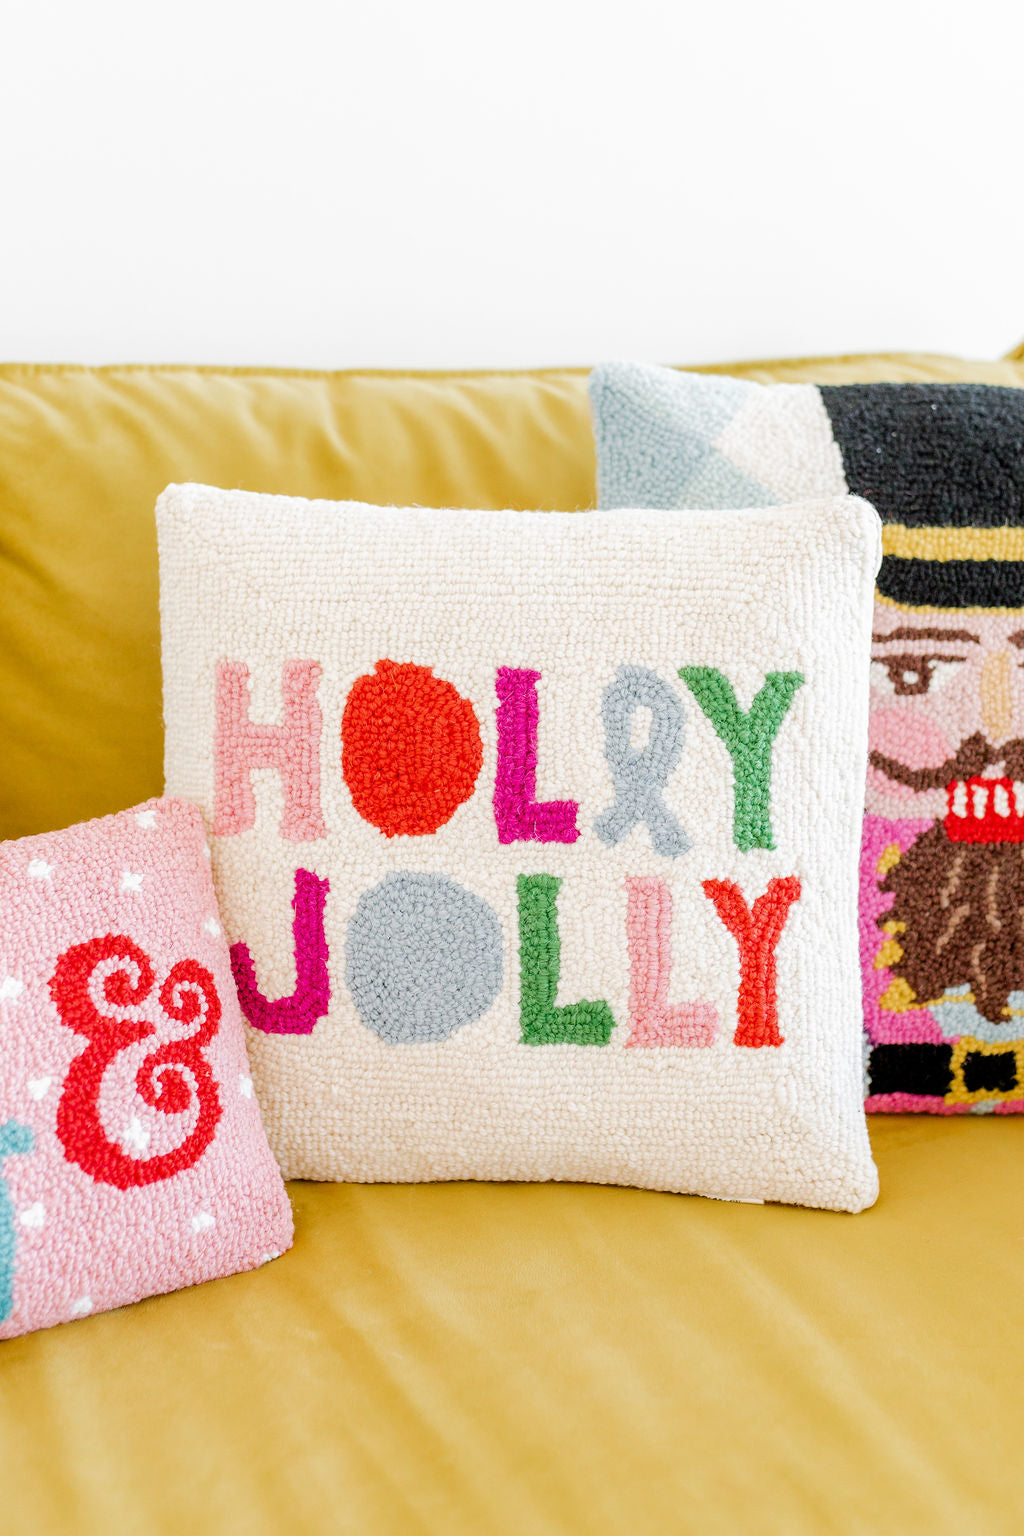 Holly Jolly Hook Pillow